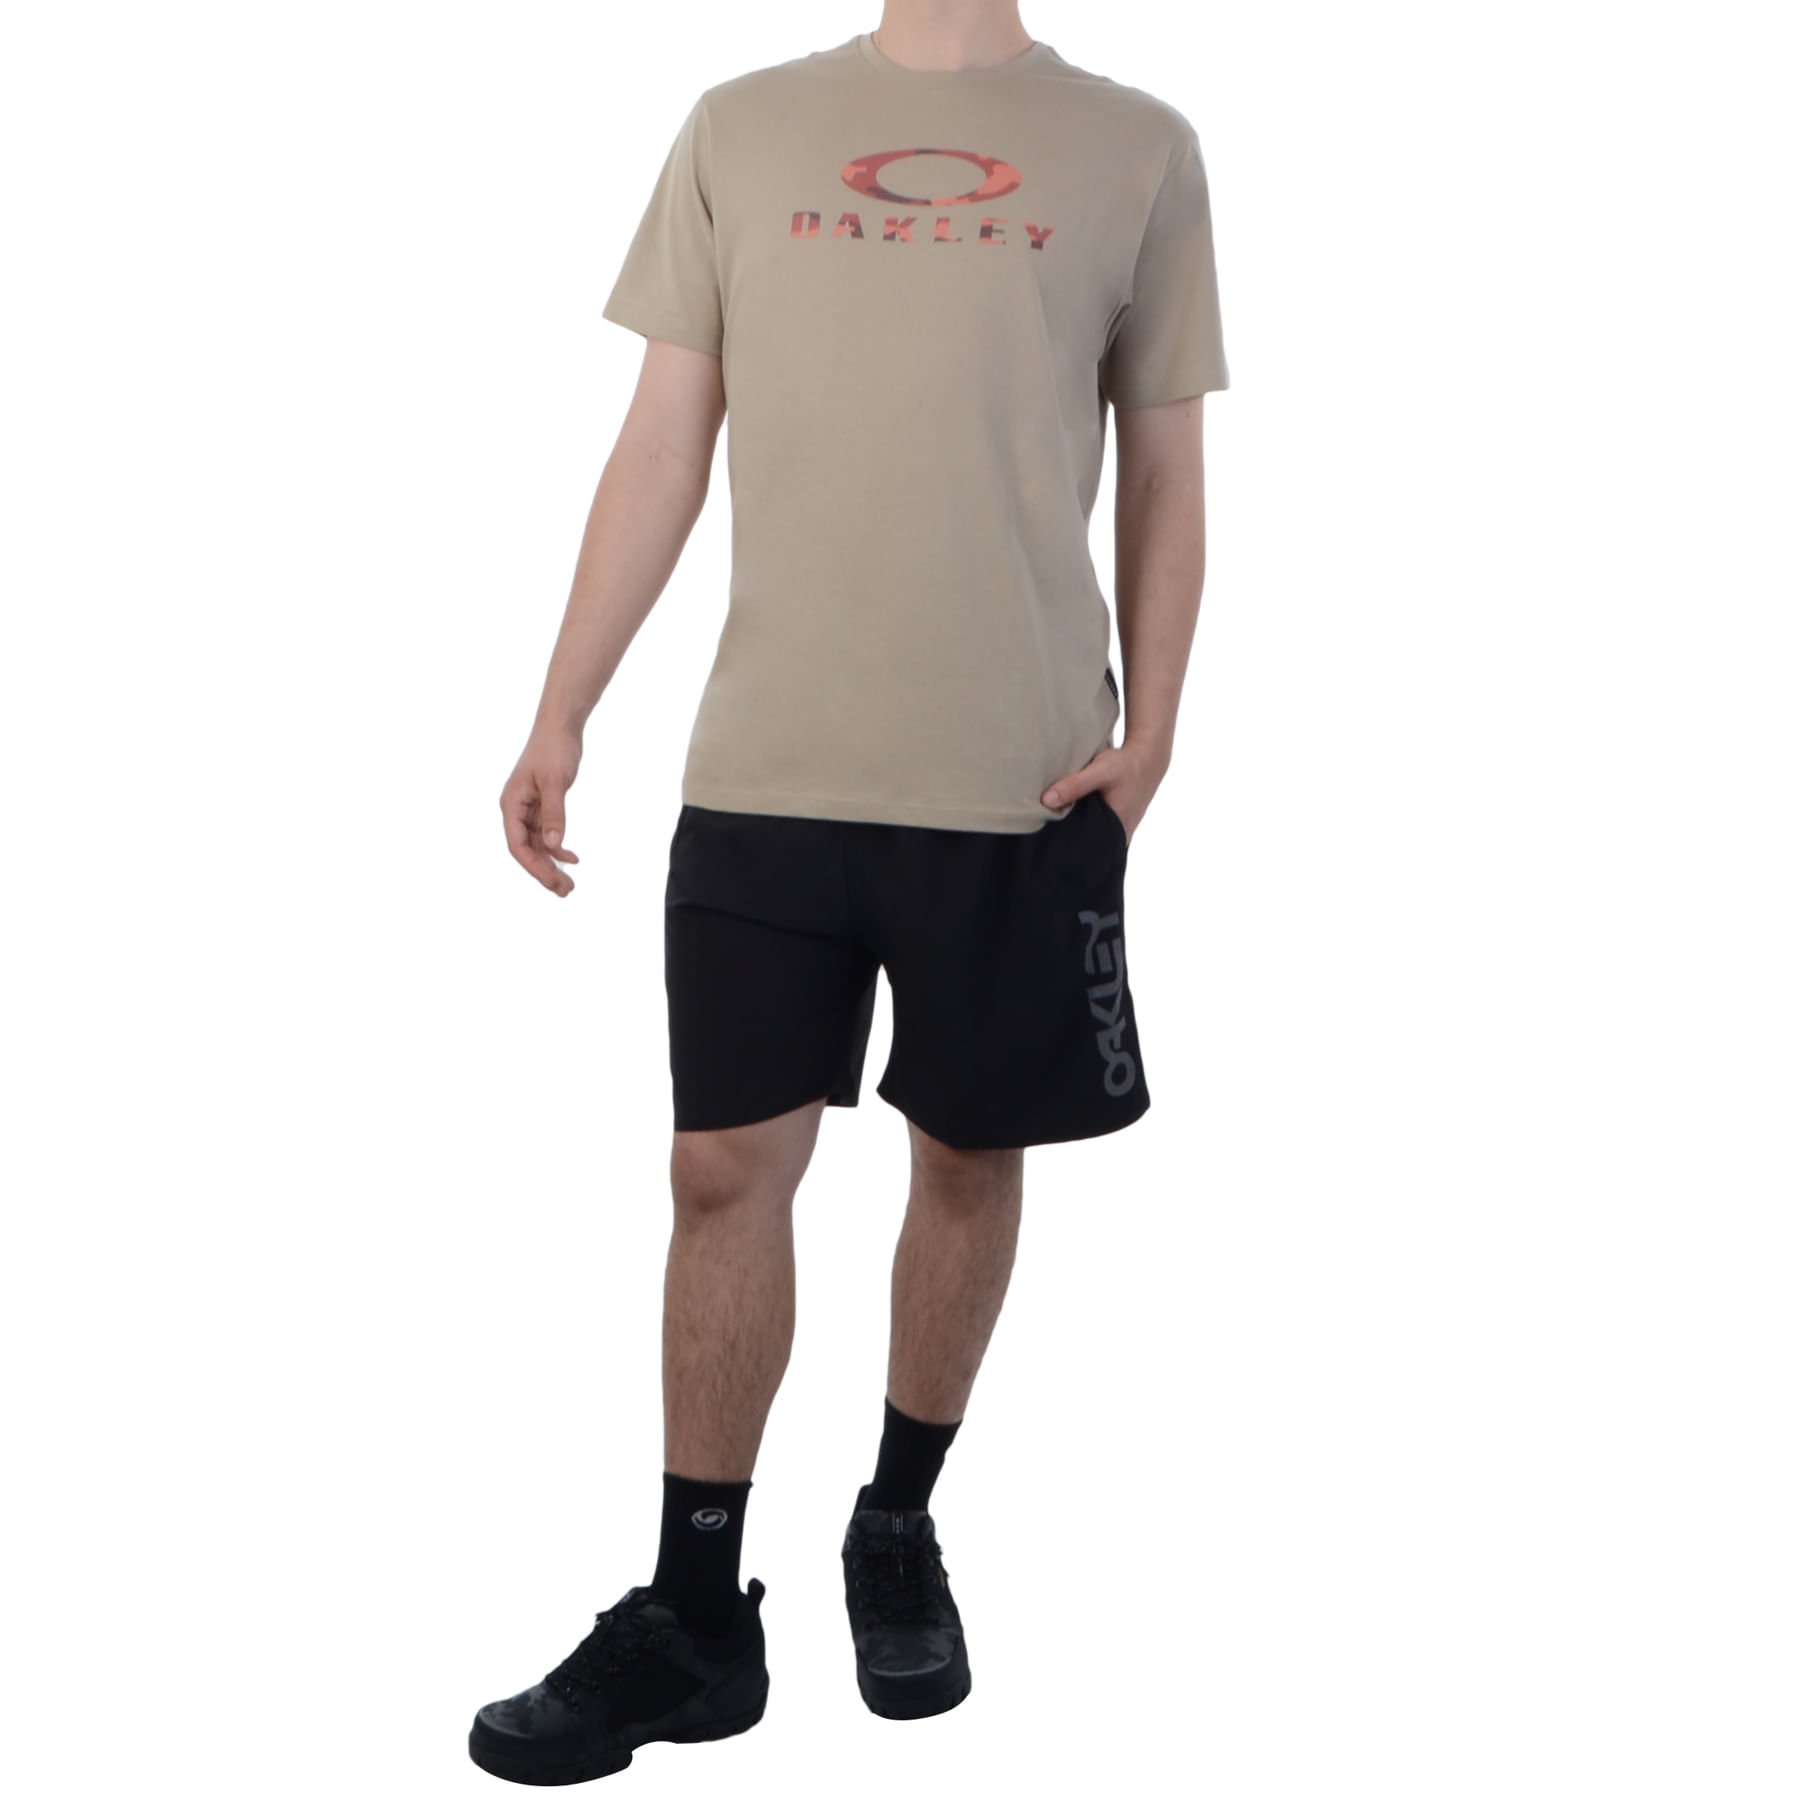 Camiseta Masculina Oakley Frog Graphic Tee - overboard